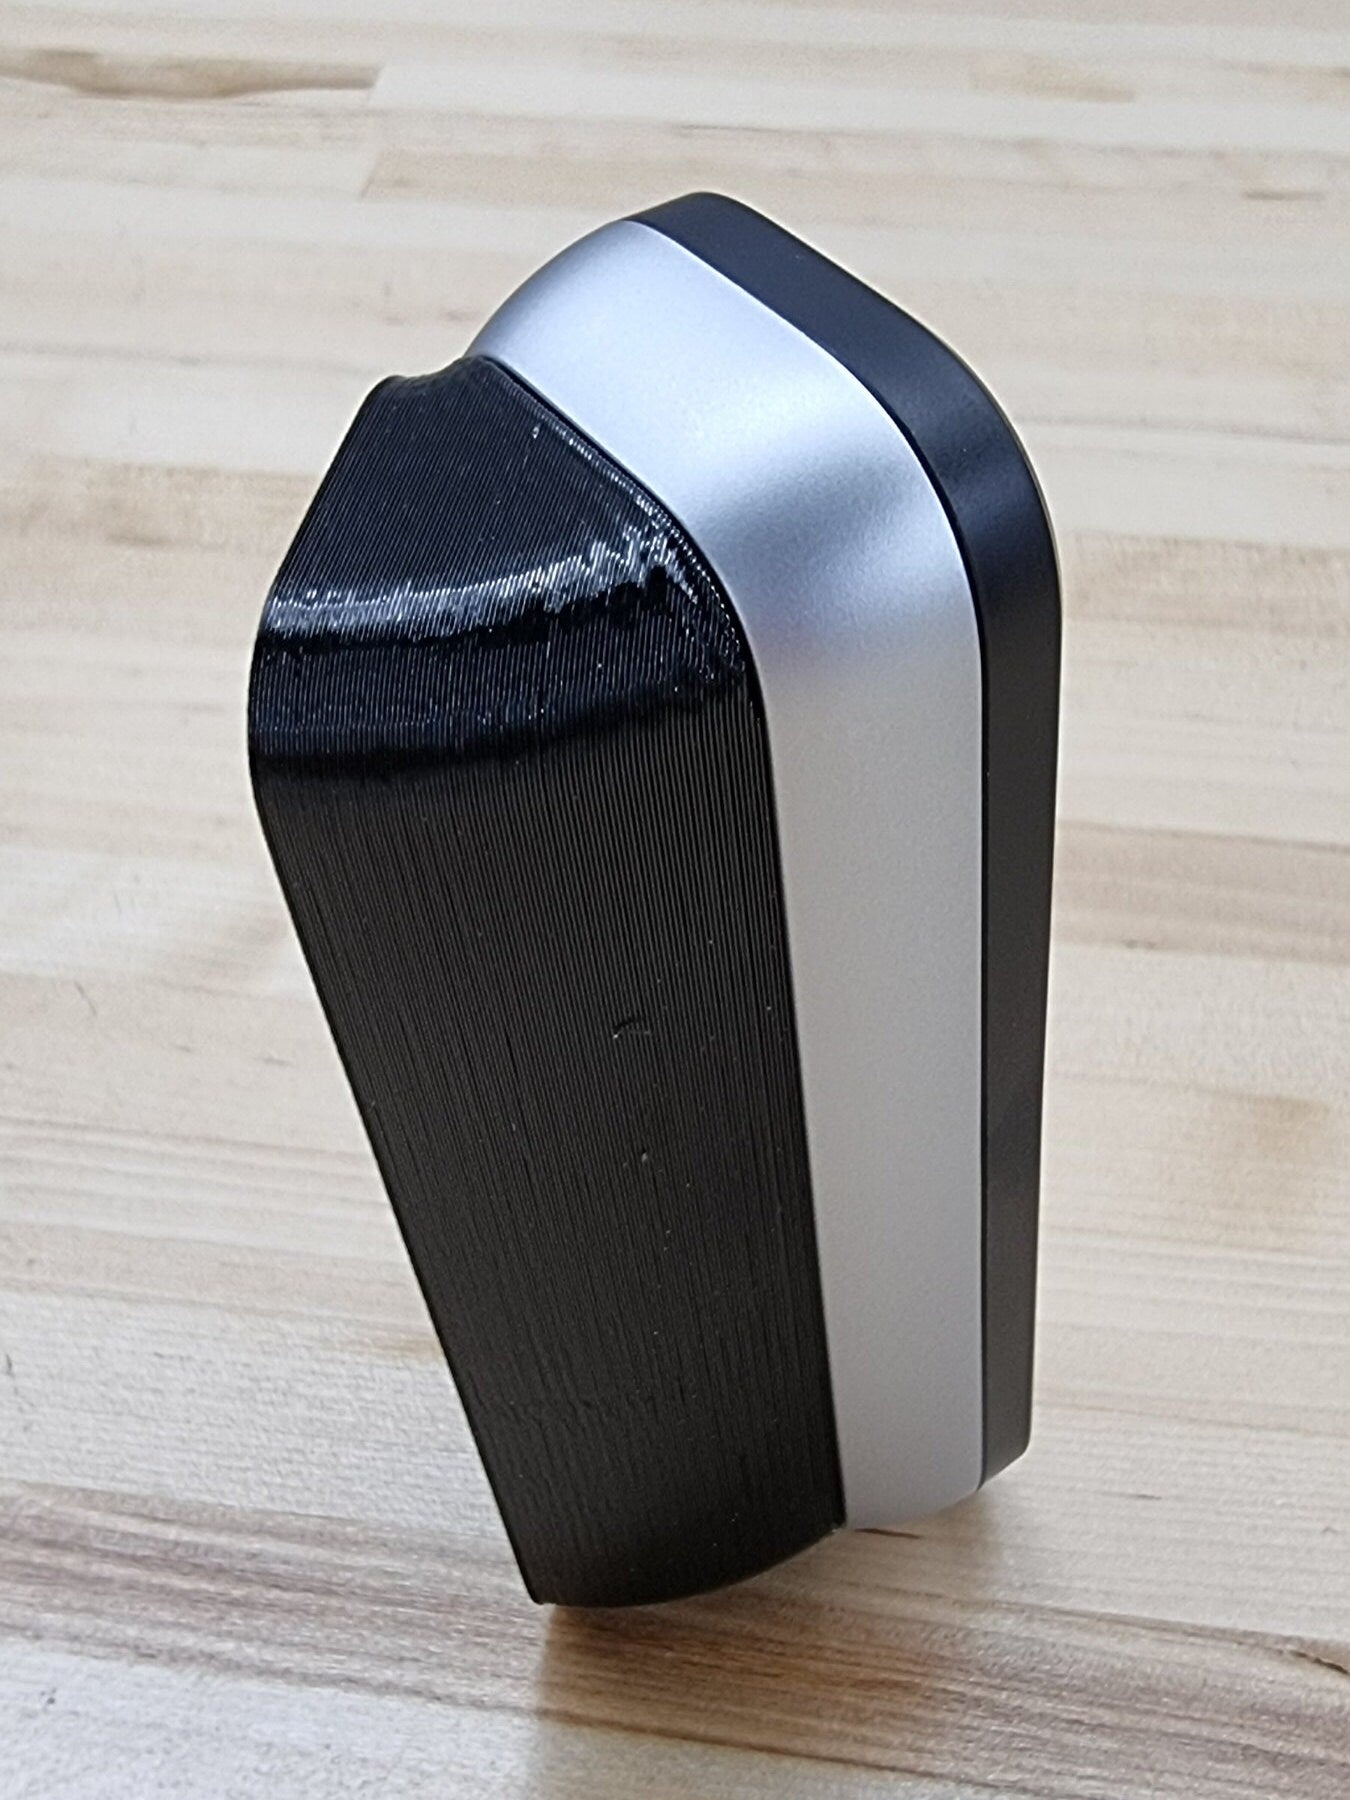 EZVIZ DB1 Mount, 45 Degree Angle. Get The Perfect Viewing Angle For Your EZVIZ DB1 Doorbell